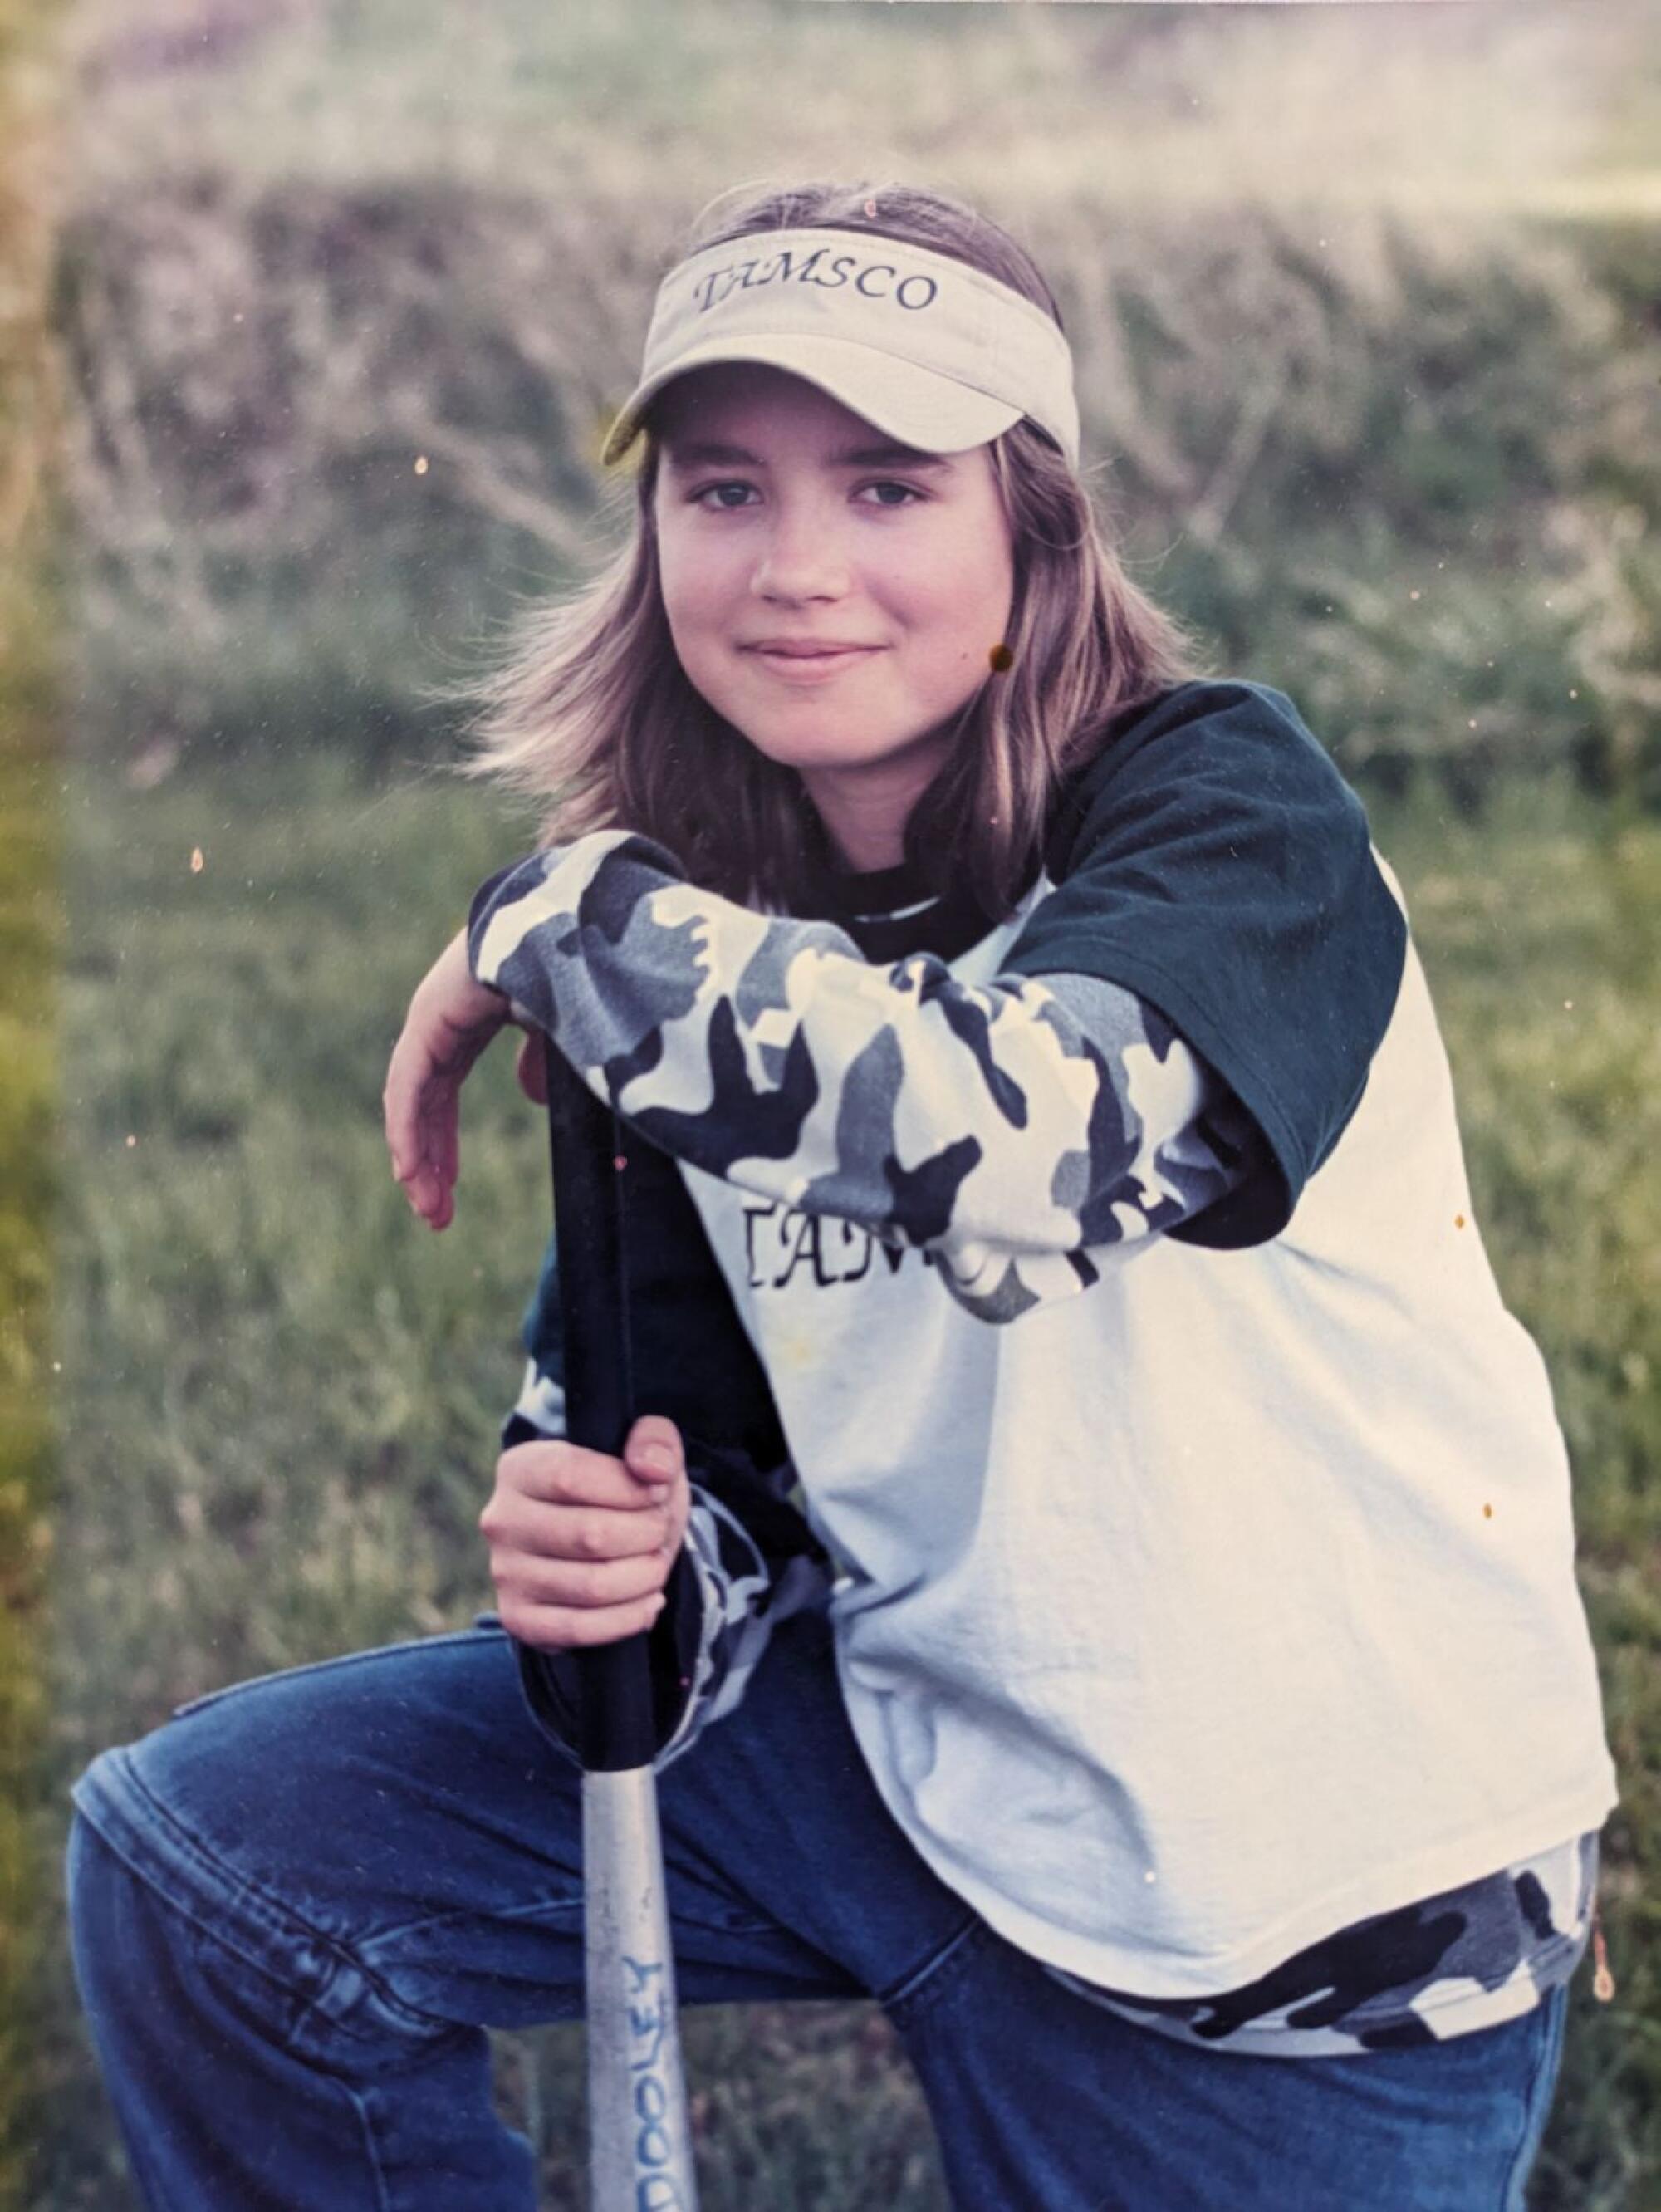 A girl wearing a visor in a grassy field 